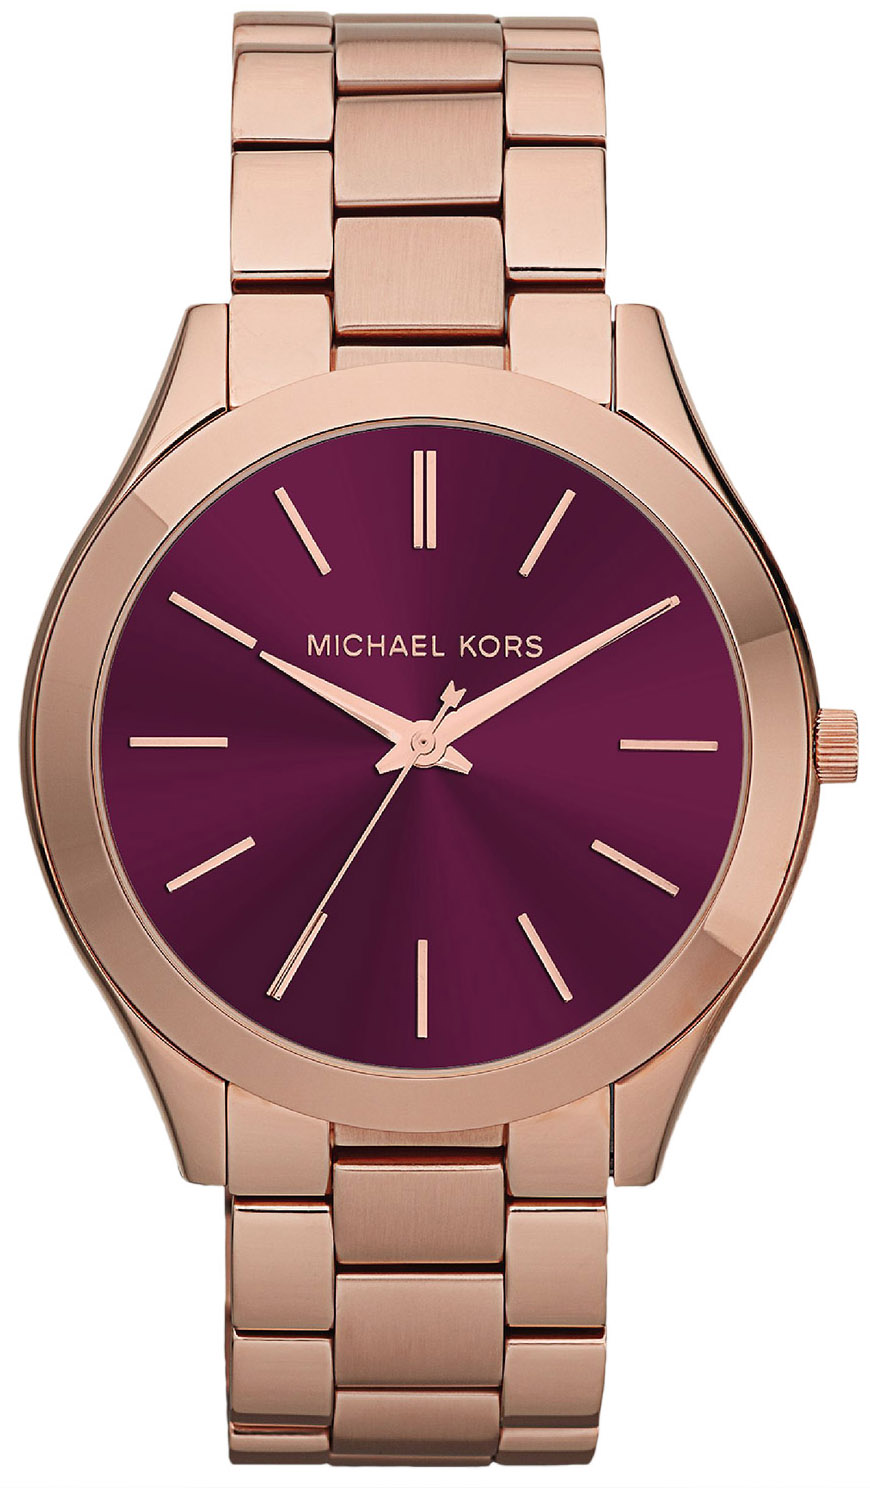 Michael Kors Women's Slim Runway Rose Gold-Tone Stainless Steel Bracelet Watch MK3436